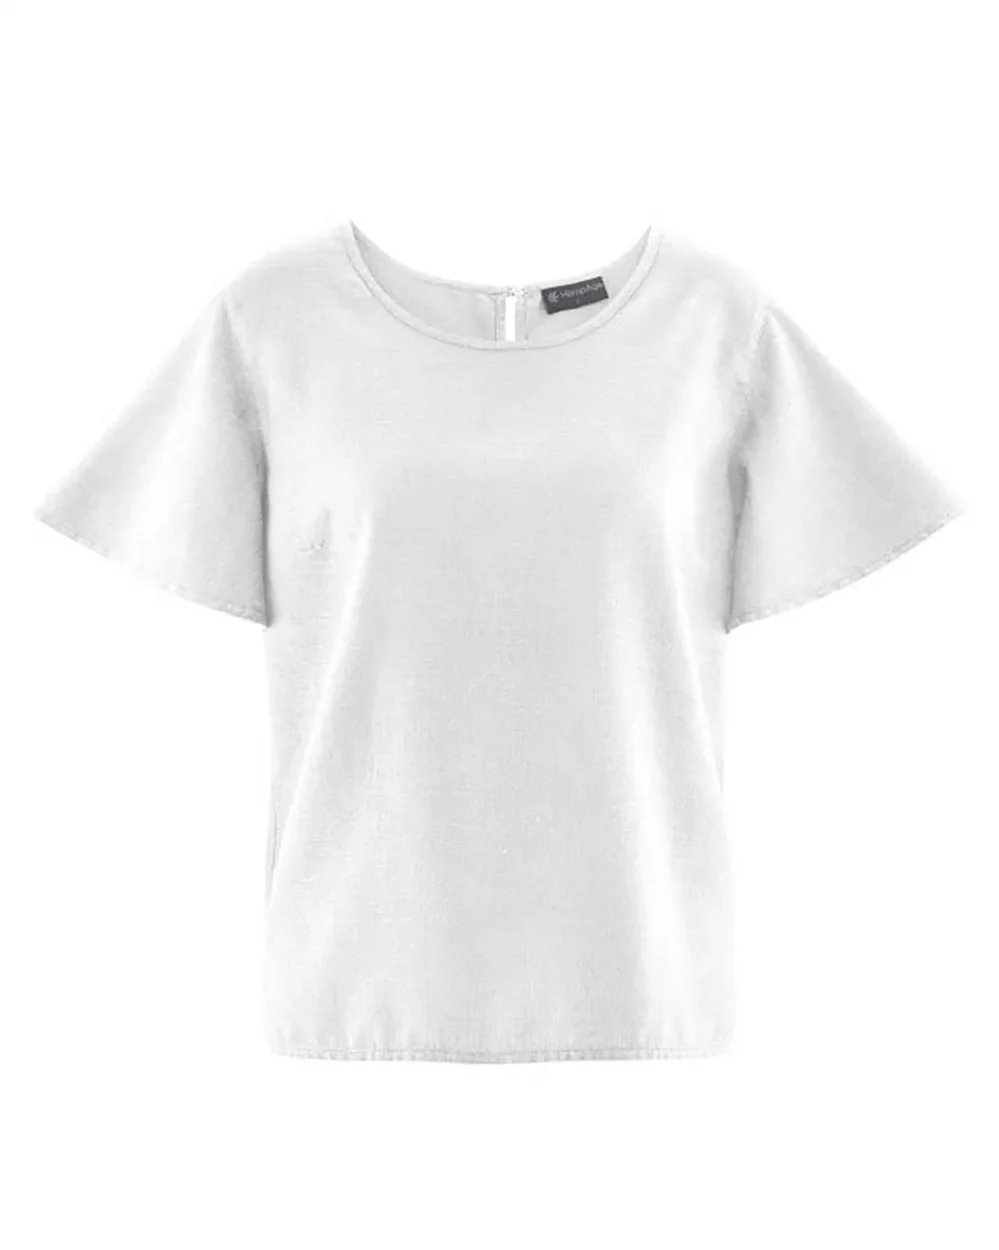 Women's Bell T-shirt in Hemp and Organic Cotton